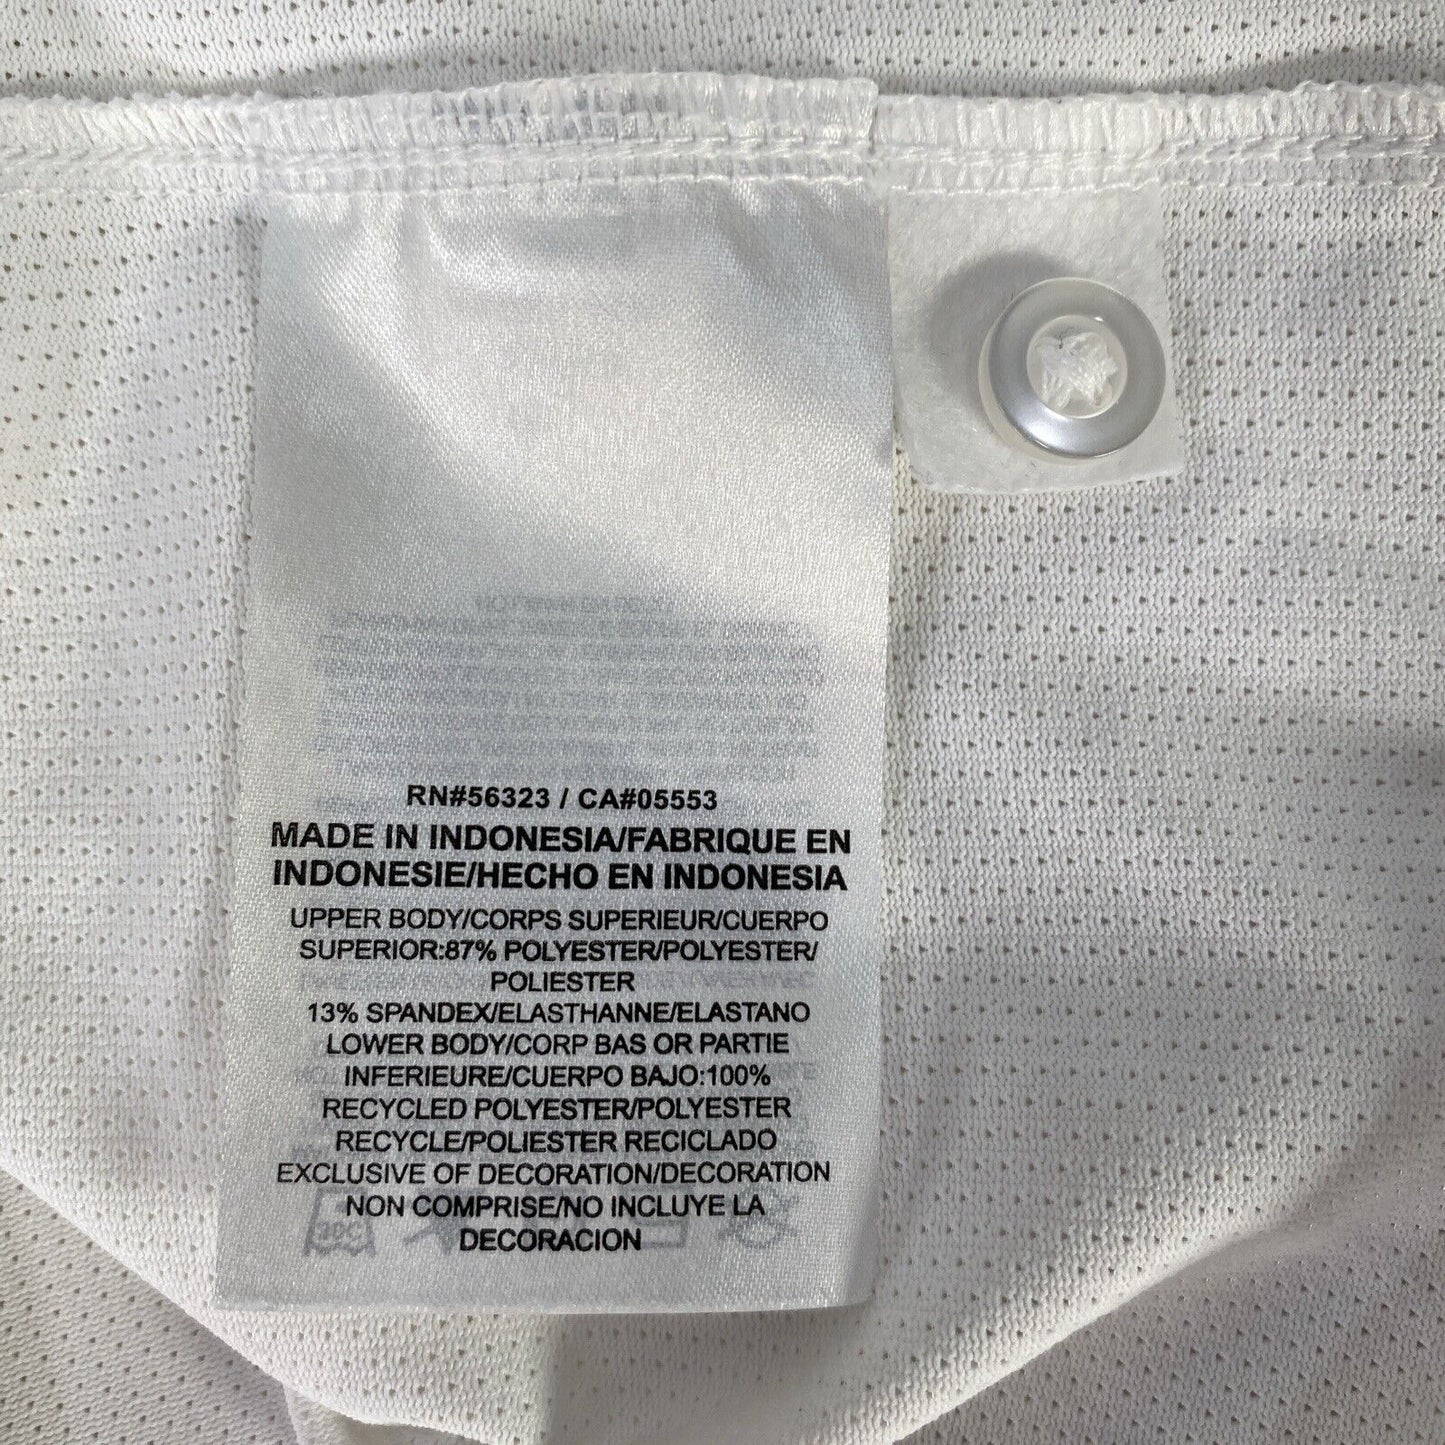 Nike Men's White MSU Michigan State Spartans Golf Polo Shirt - XL